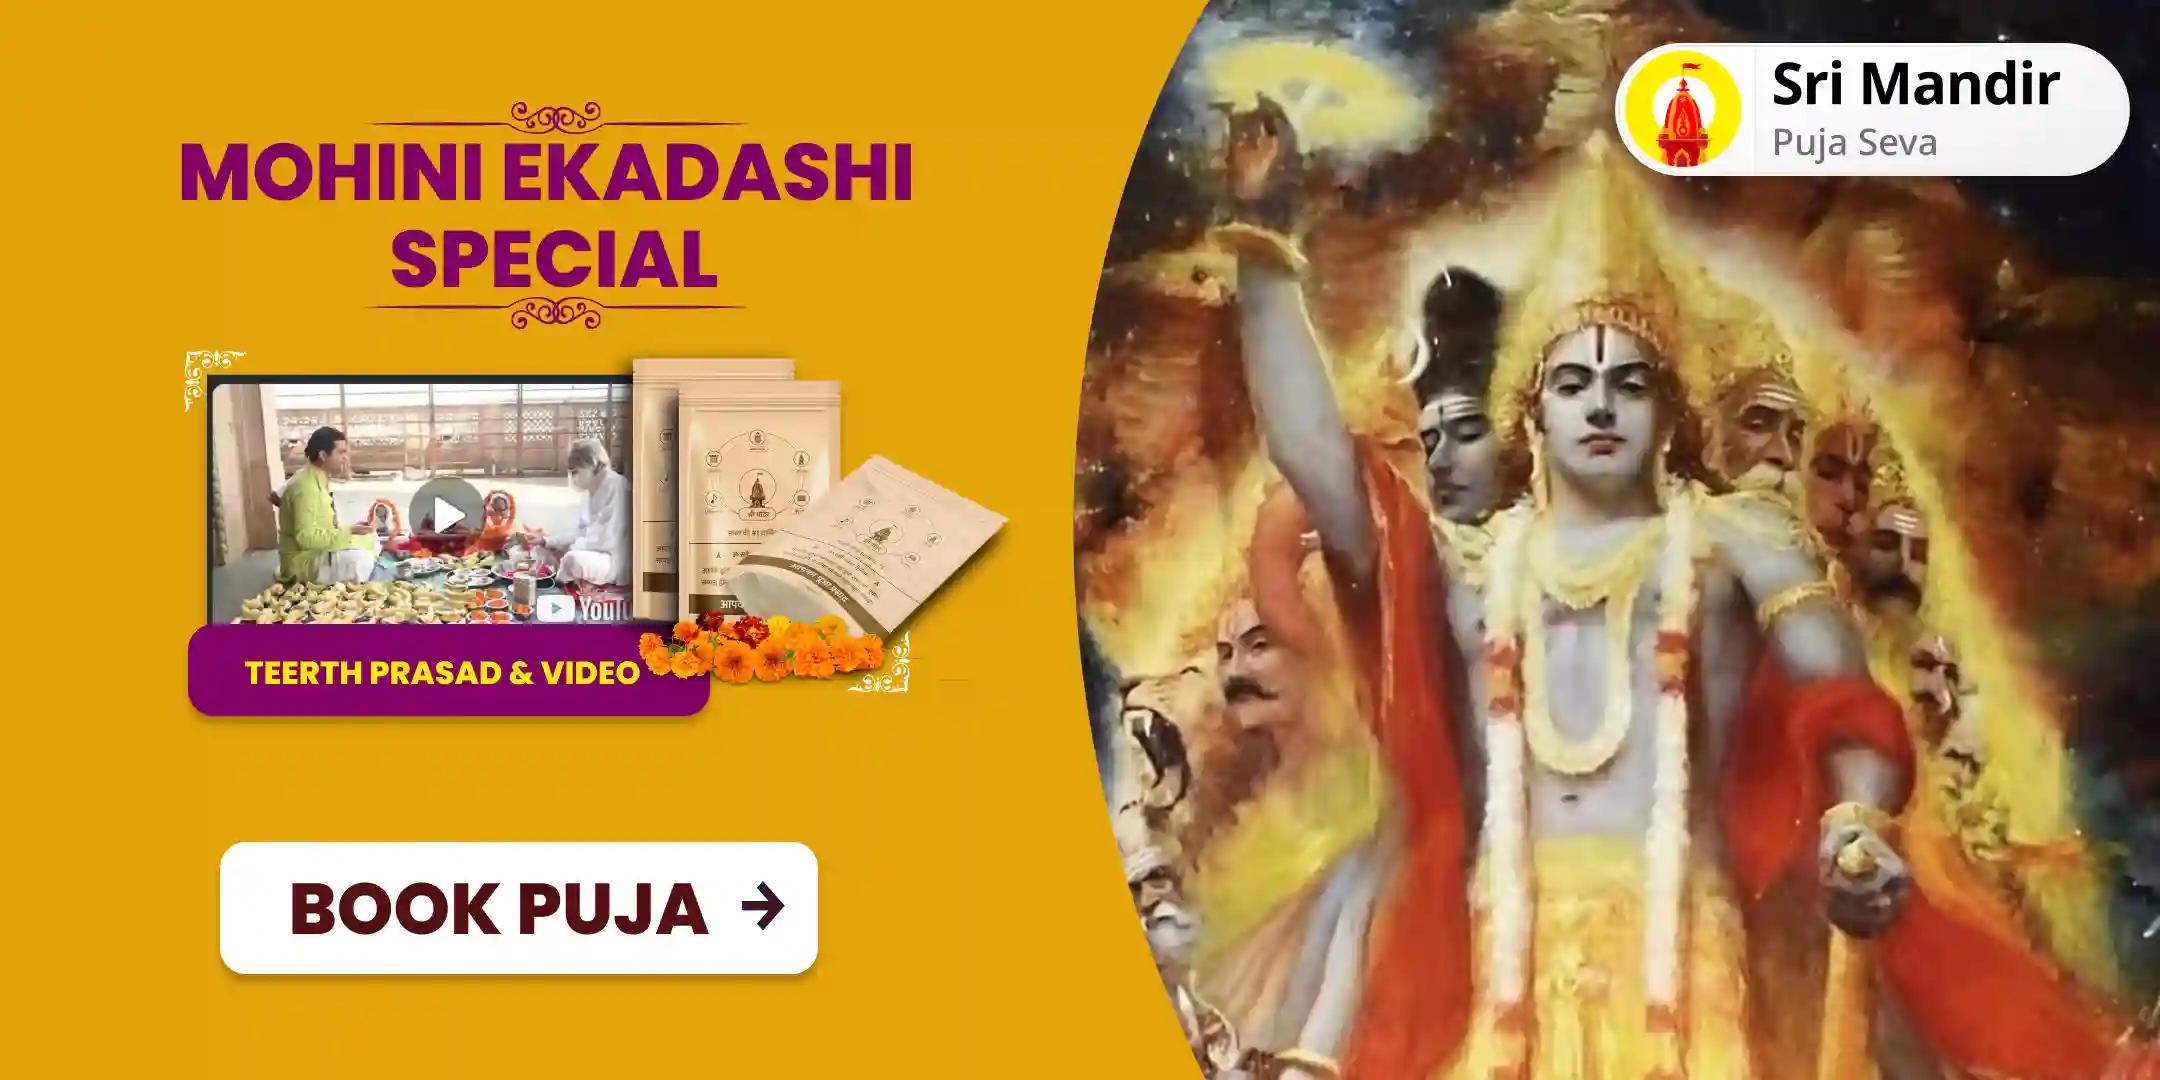 Mohini Ekadashi Special Ekadashi Vrat Katha, Vishnu Vishnu Sahasranama Path and Anna Daan for Prosperity and Spiritual Well-Being